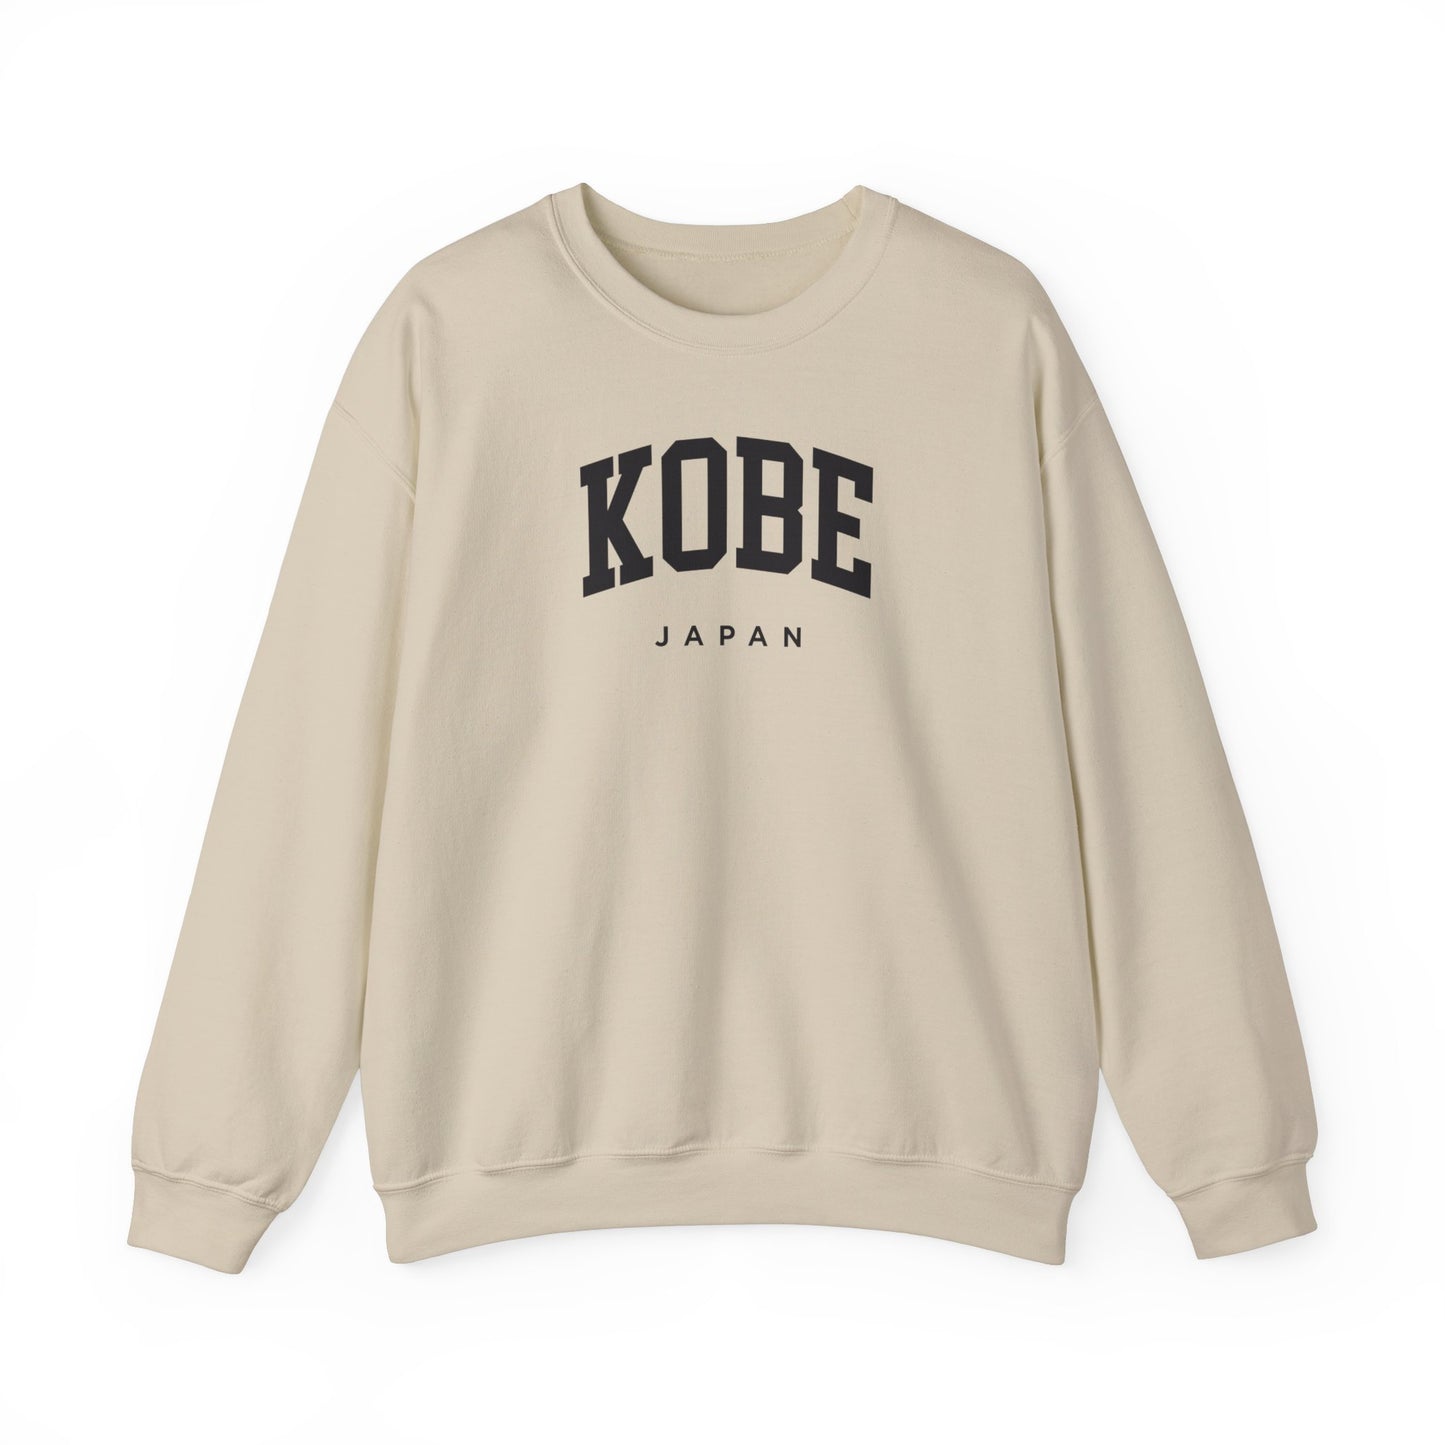 Kobe Japan Sweatshirt